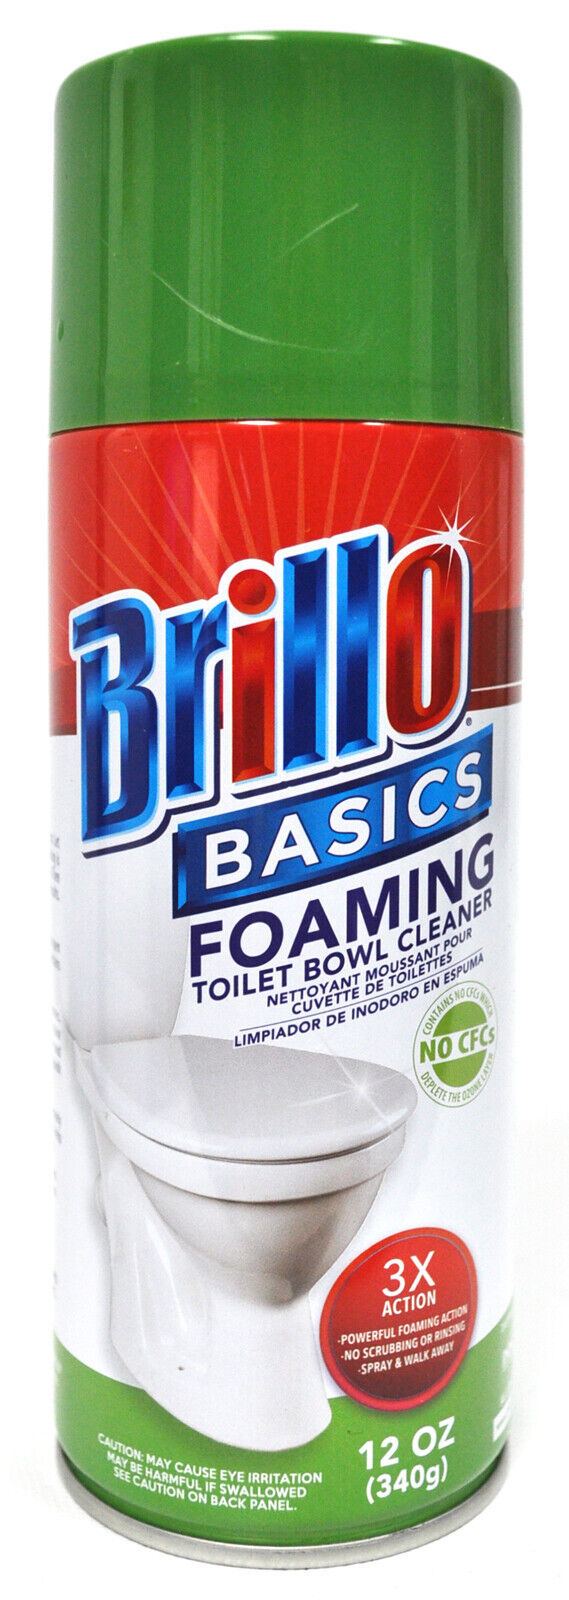 Brillo Basics Foaming Toilet Bowl Cleaner(12oz) - Papaya Express